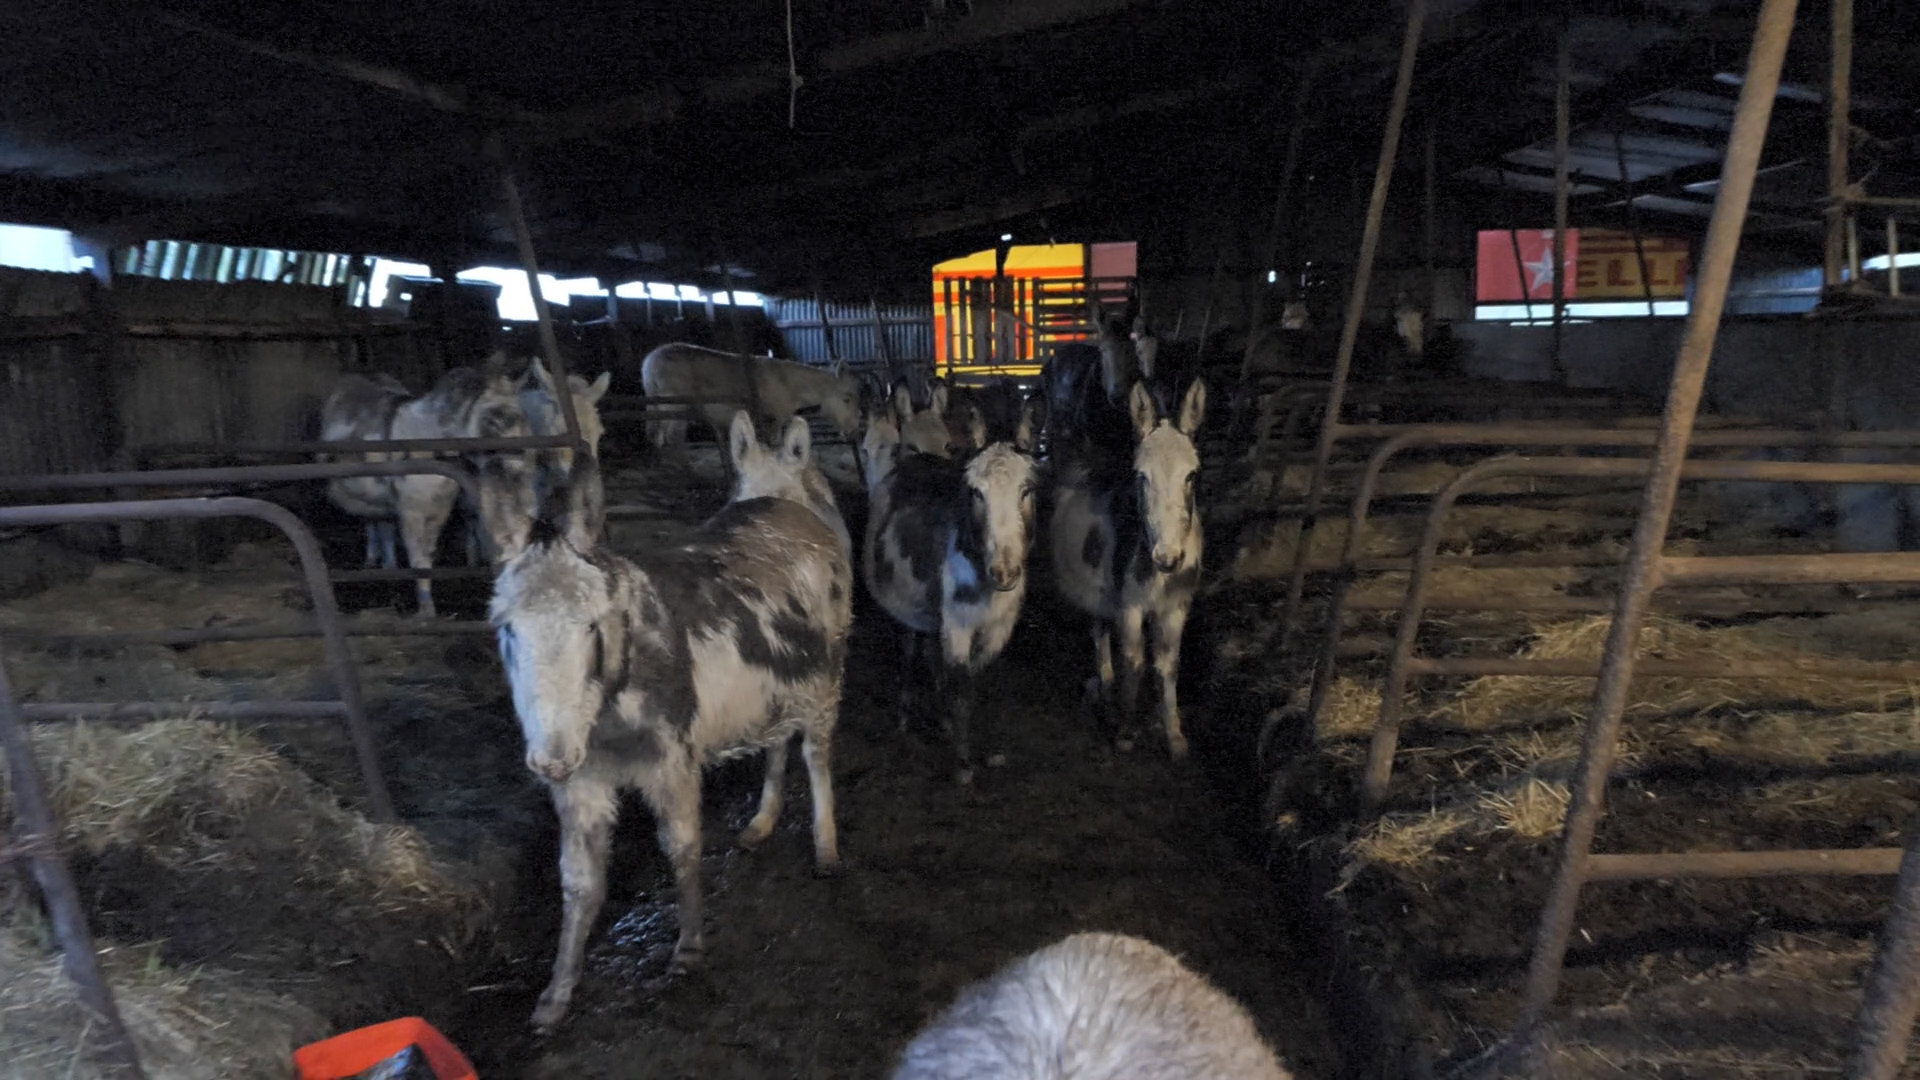 (c) The Donkey Sanctuary: Donkeys found in barn at location